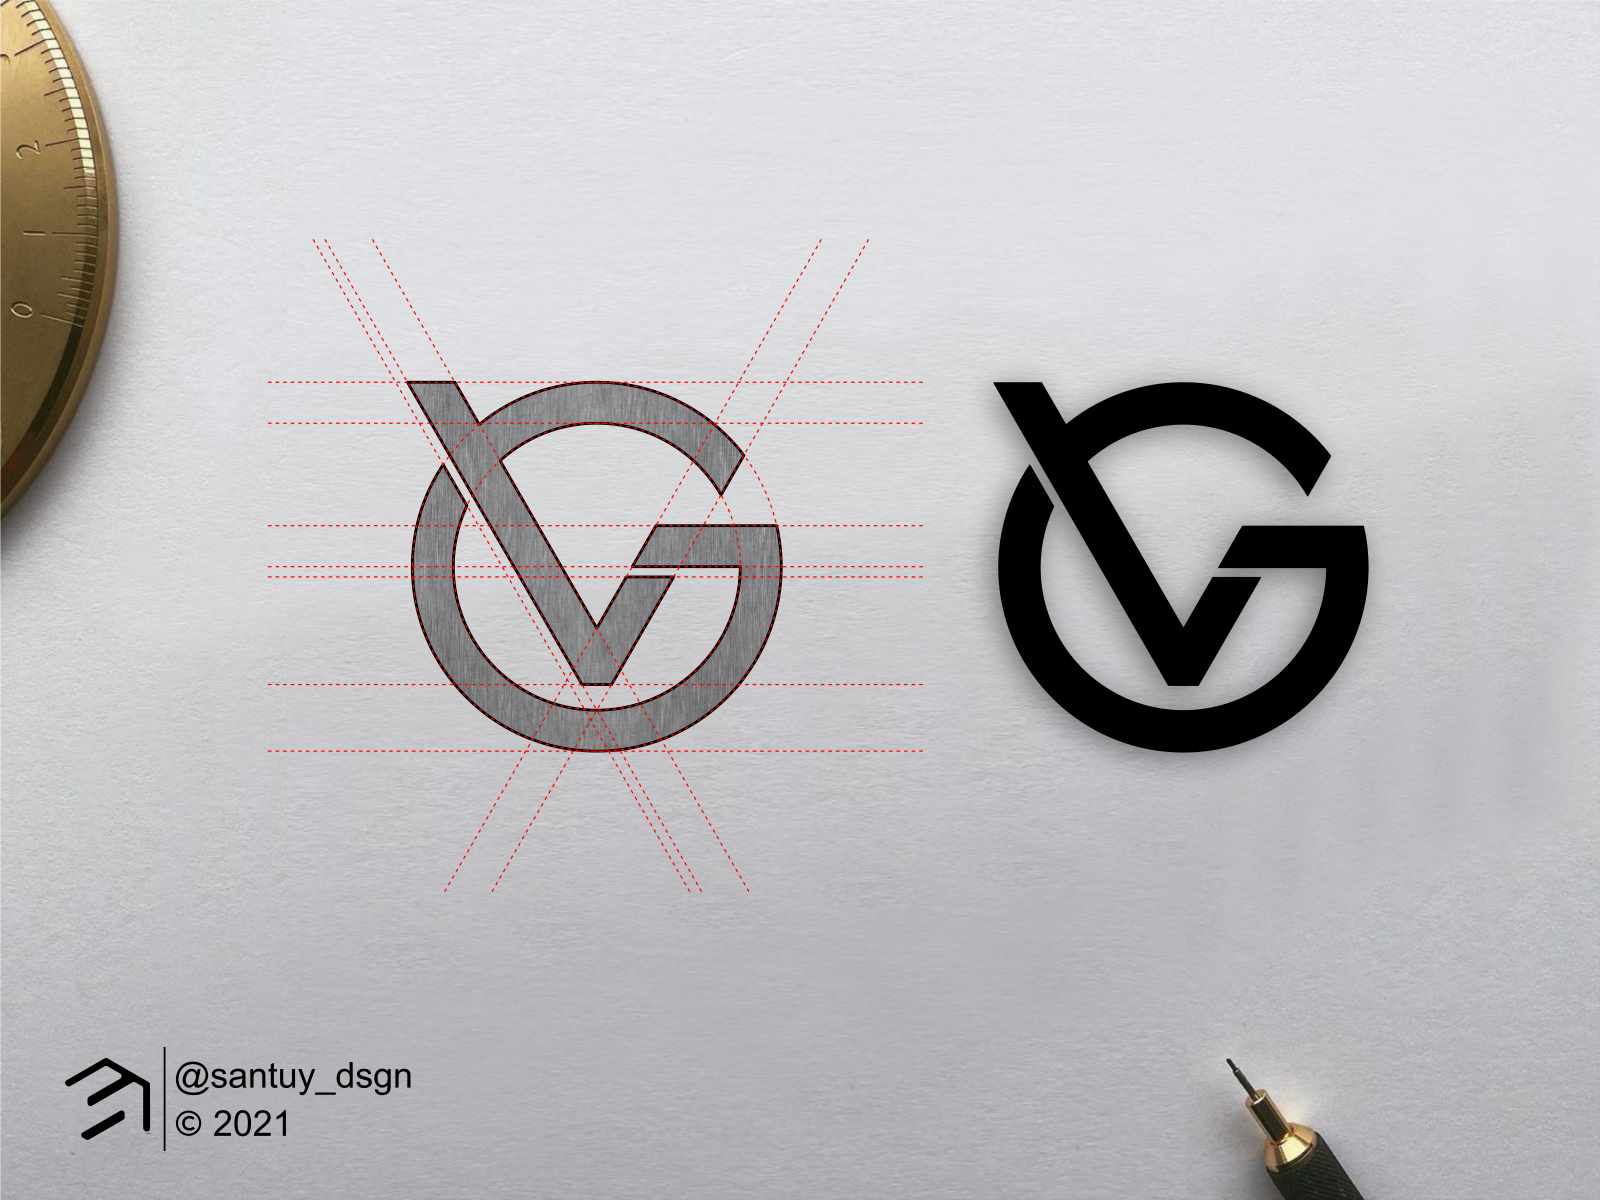 V Or V G Creative Design Vector Template - TemplateMonster